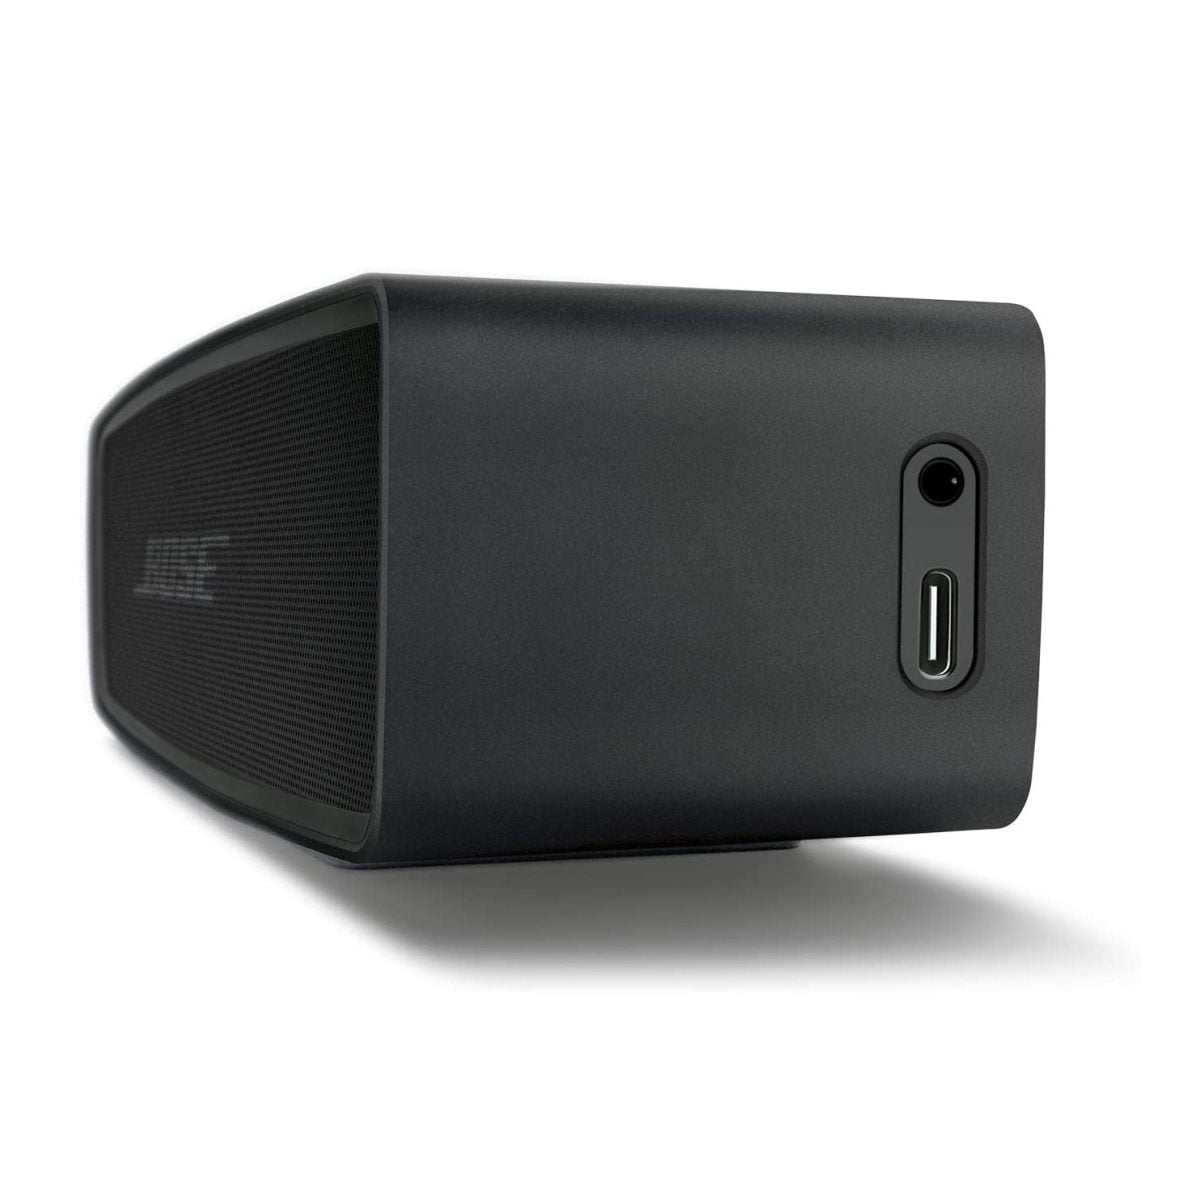 Bose Soundlink Mini Ii Special Edition - Black